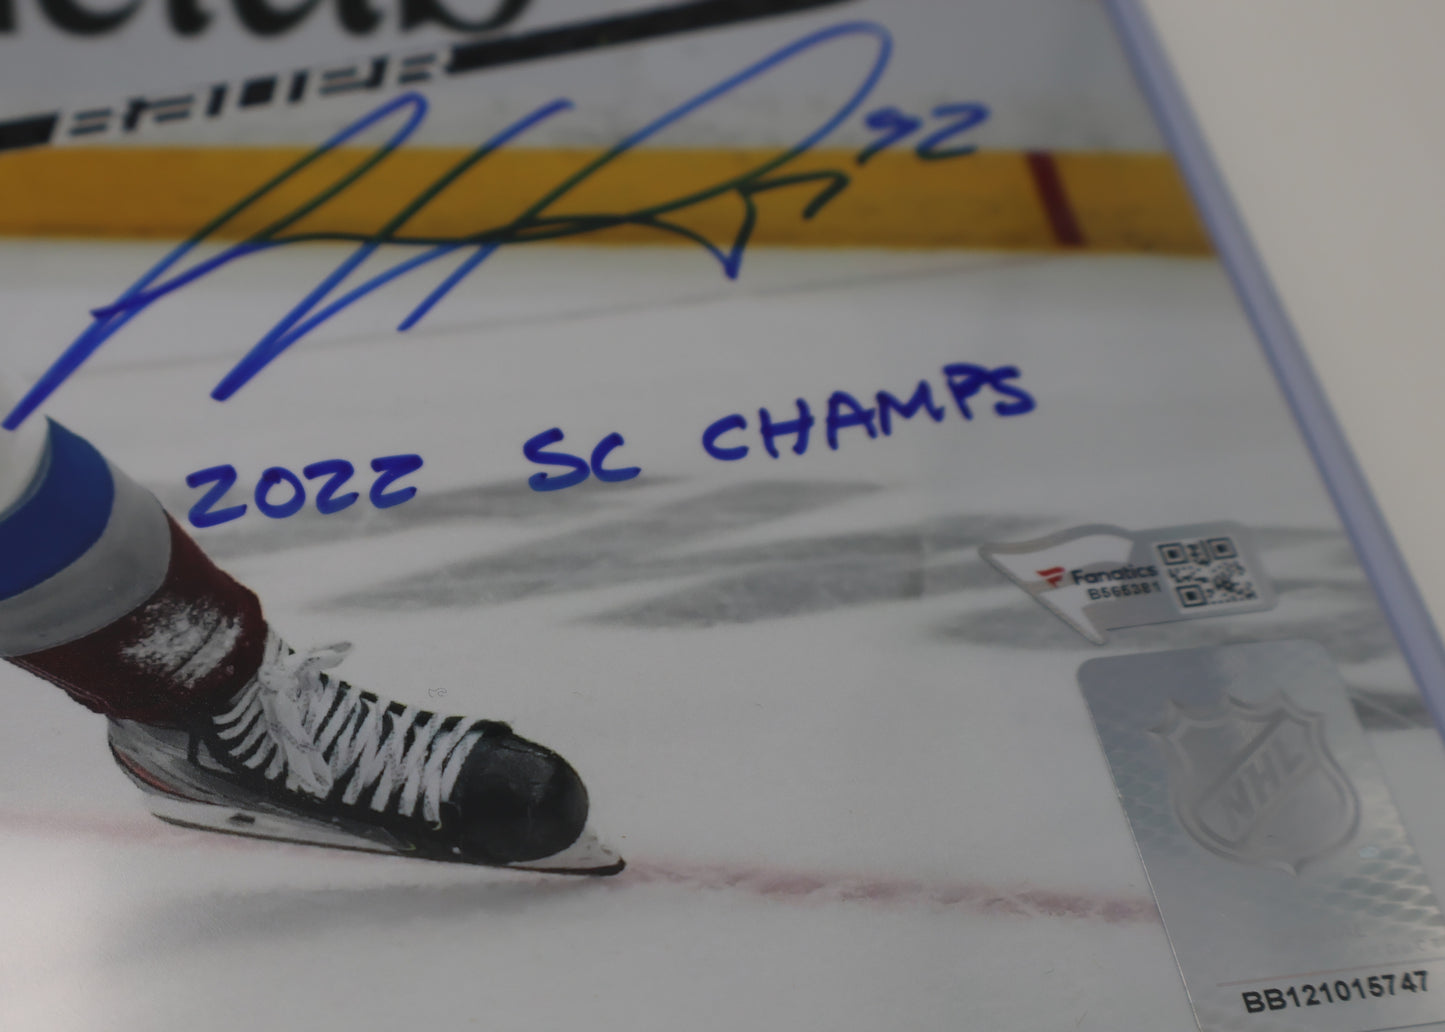 Gabriel Landeskog Colorado Avalanche Autographed 8"x10" Photo inscribed "2022 SC Champs"